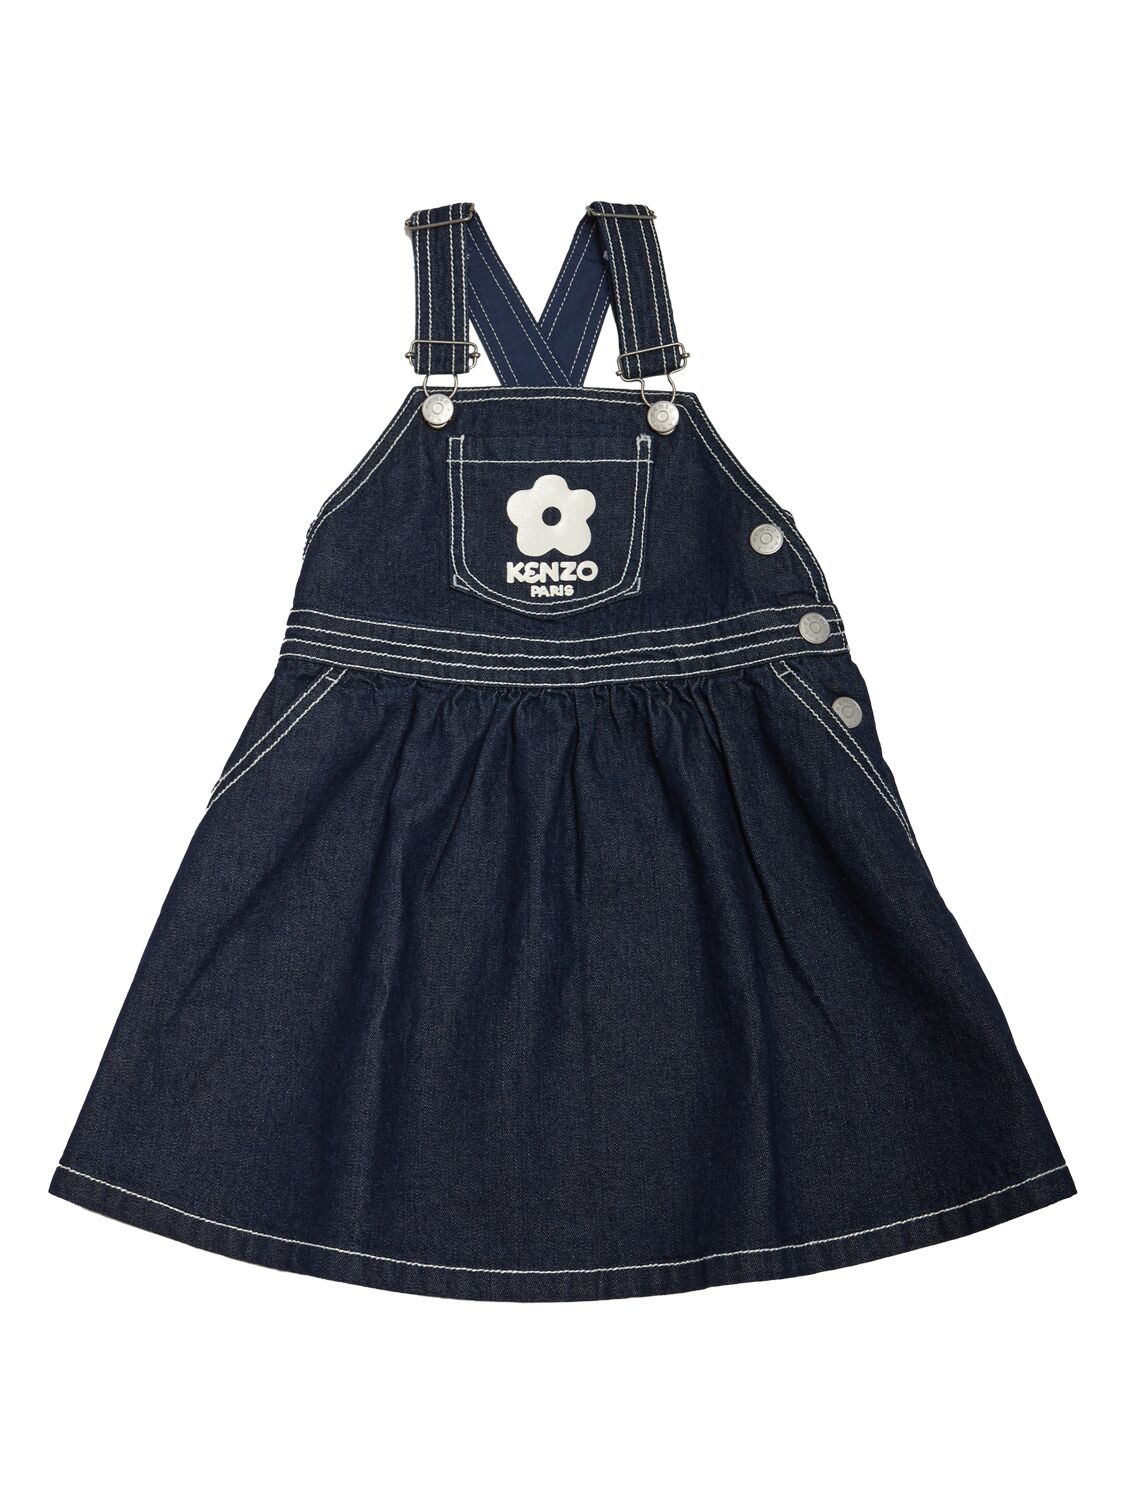 Kenzo Kids' Cotton Denim Dress